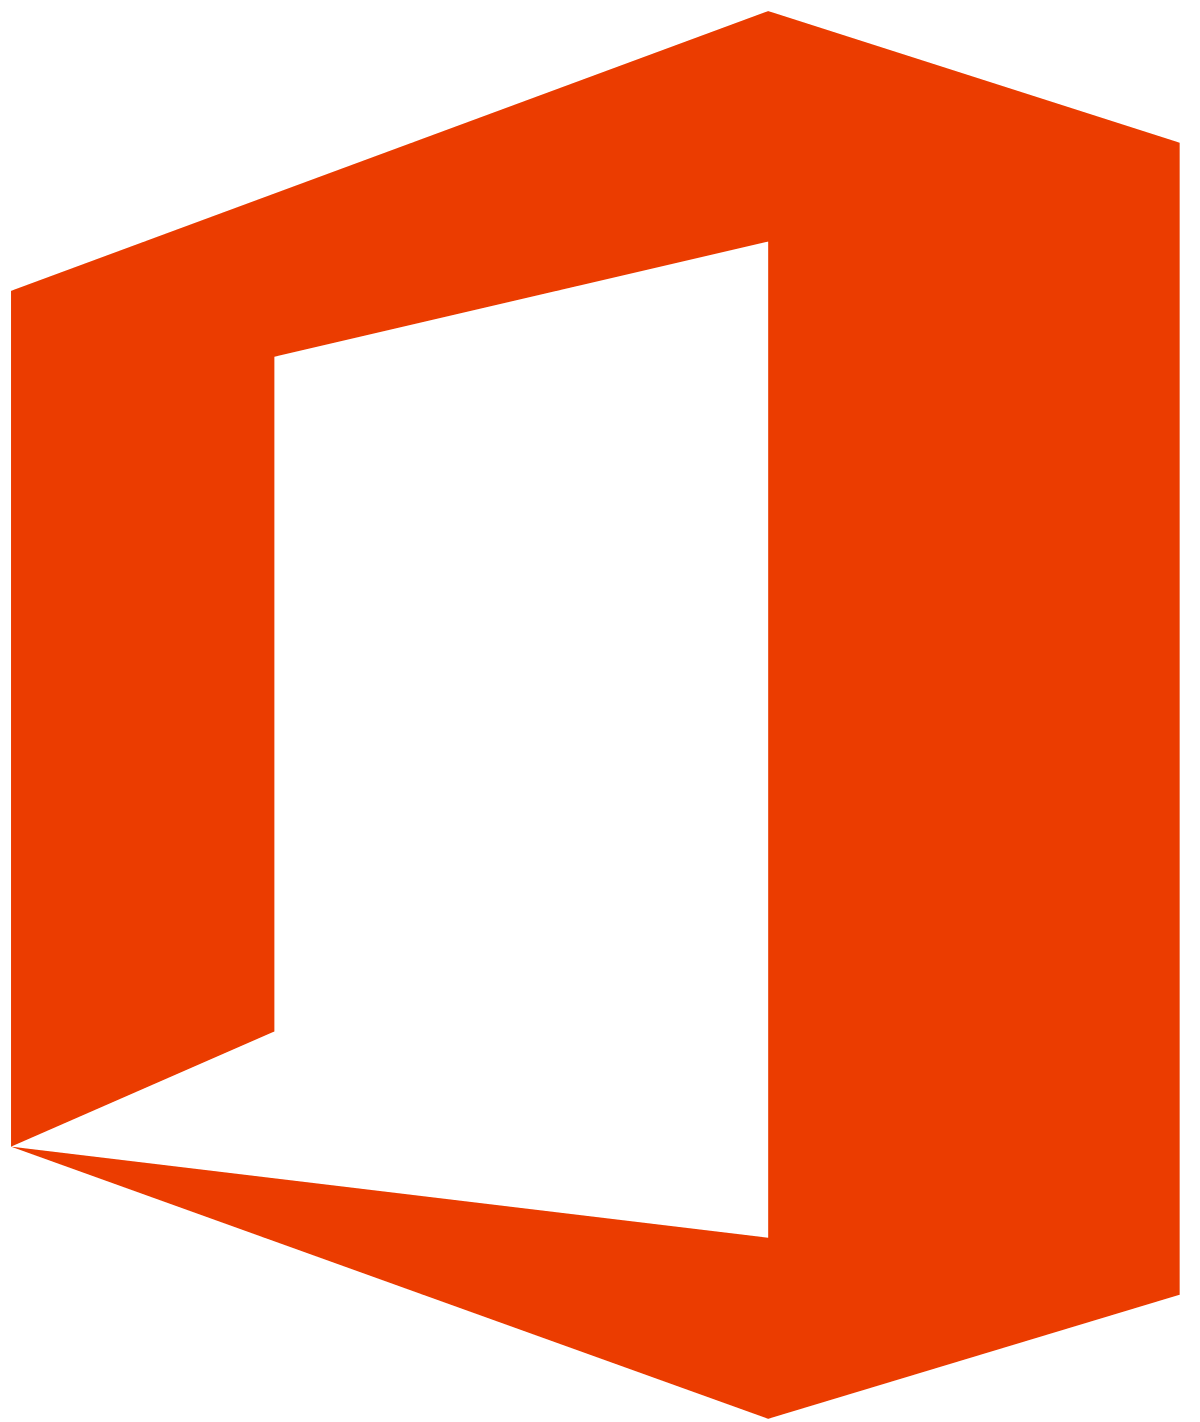 microsoft office logo 2013